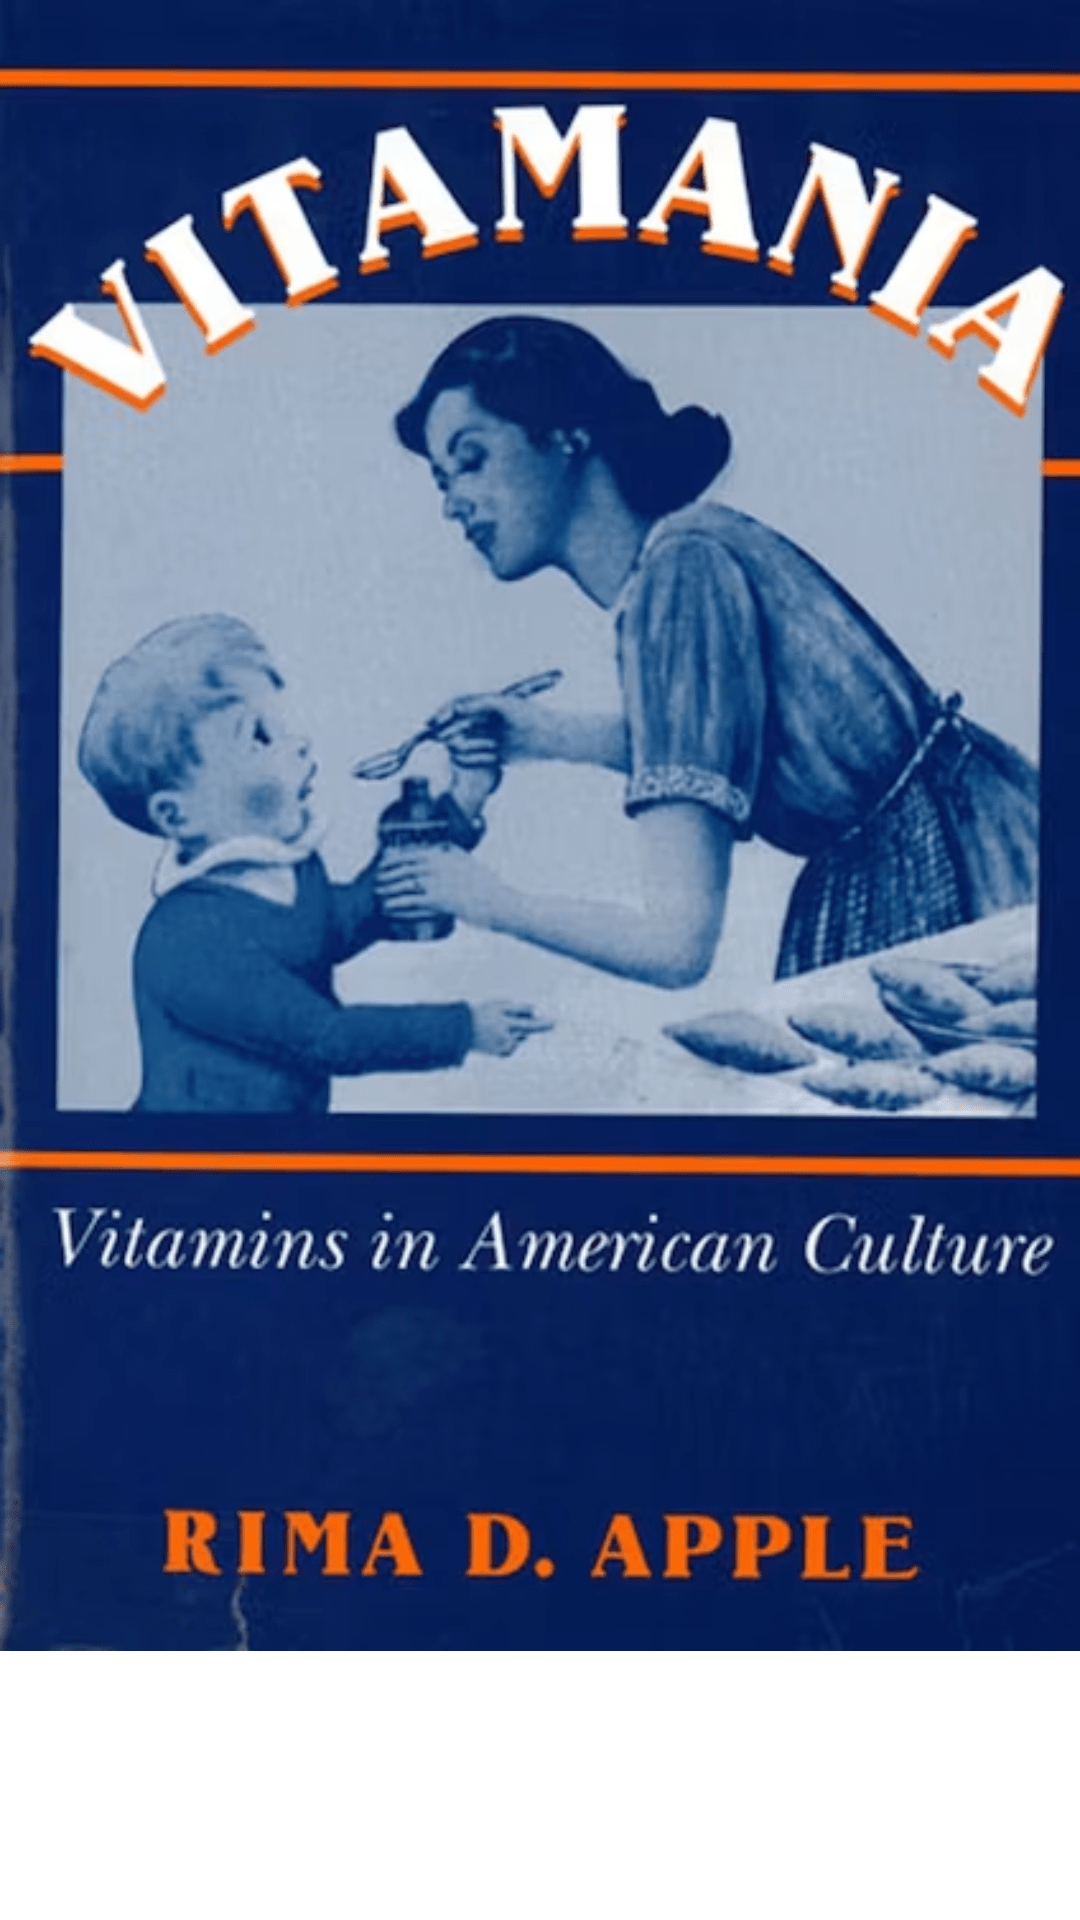 Vitamania: Vitamins in American Culture